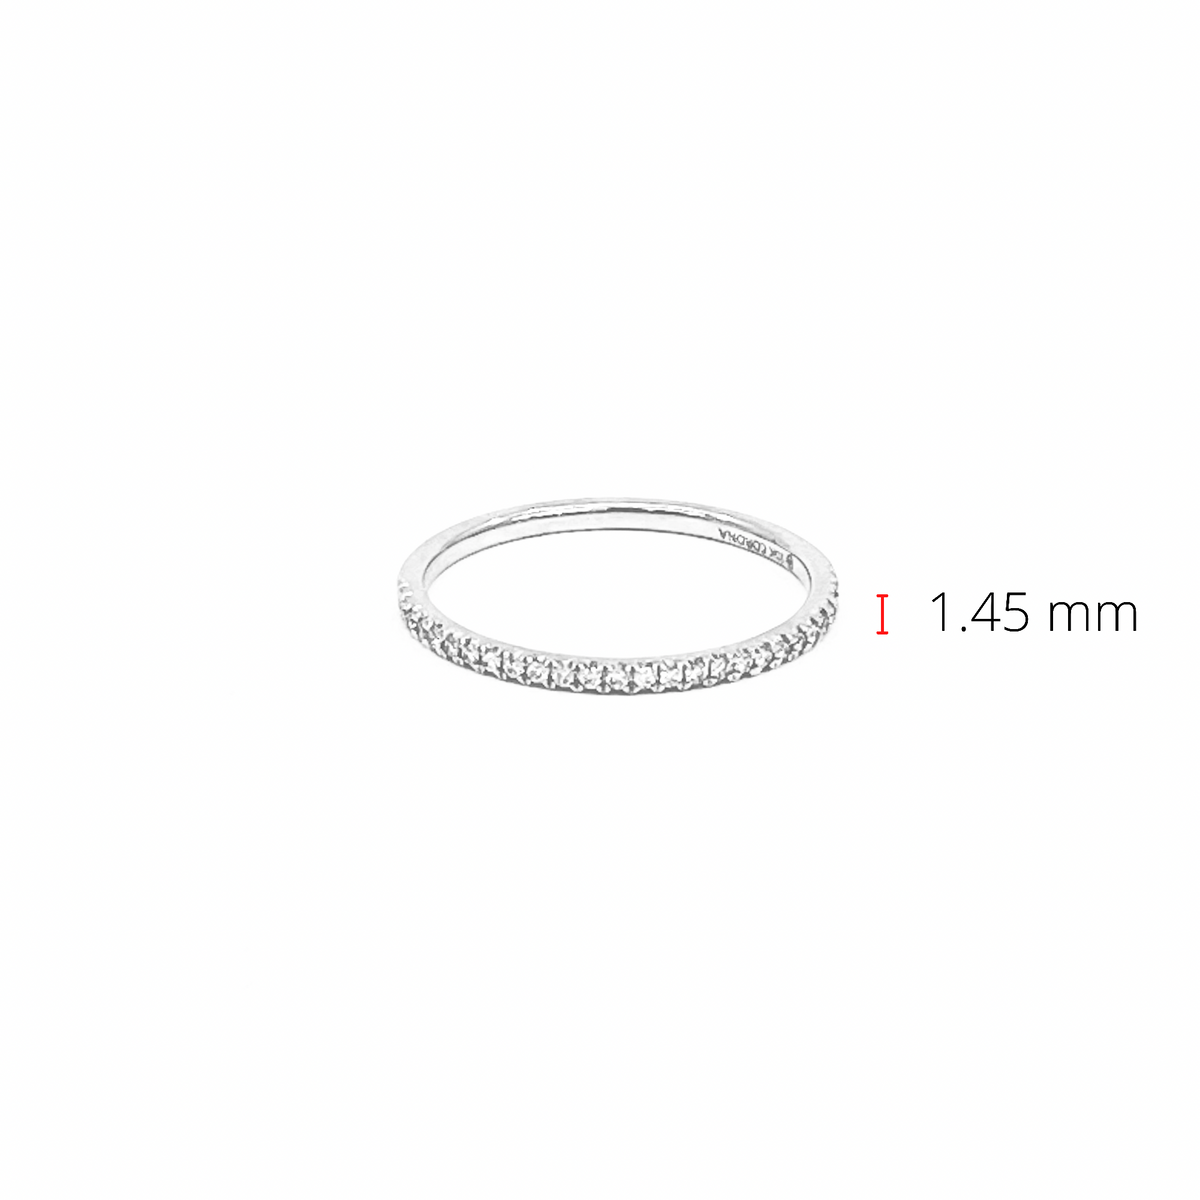 10K White Gold 0.15cttw Diamond Pave Ring, Size 7